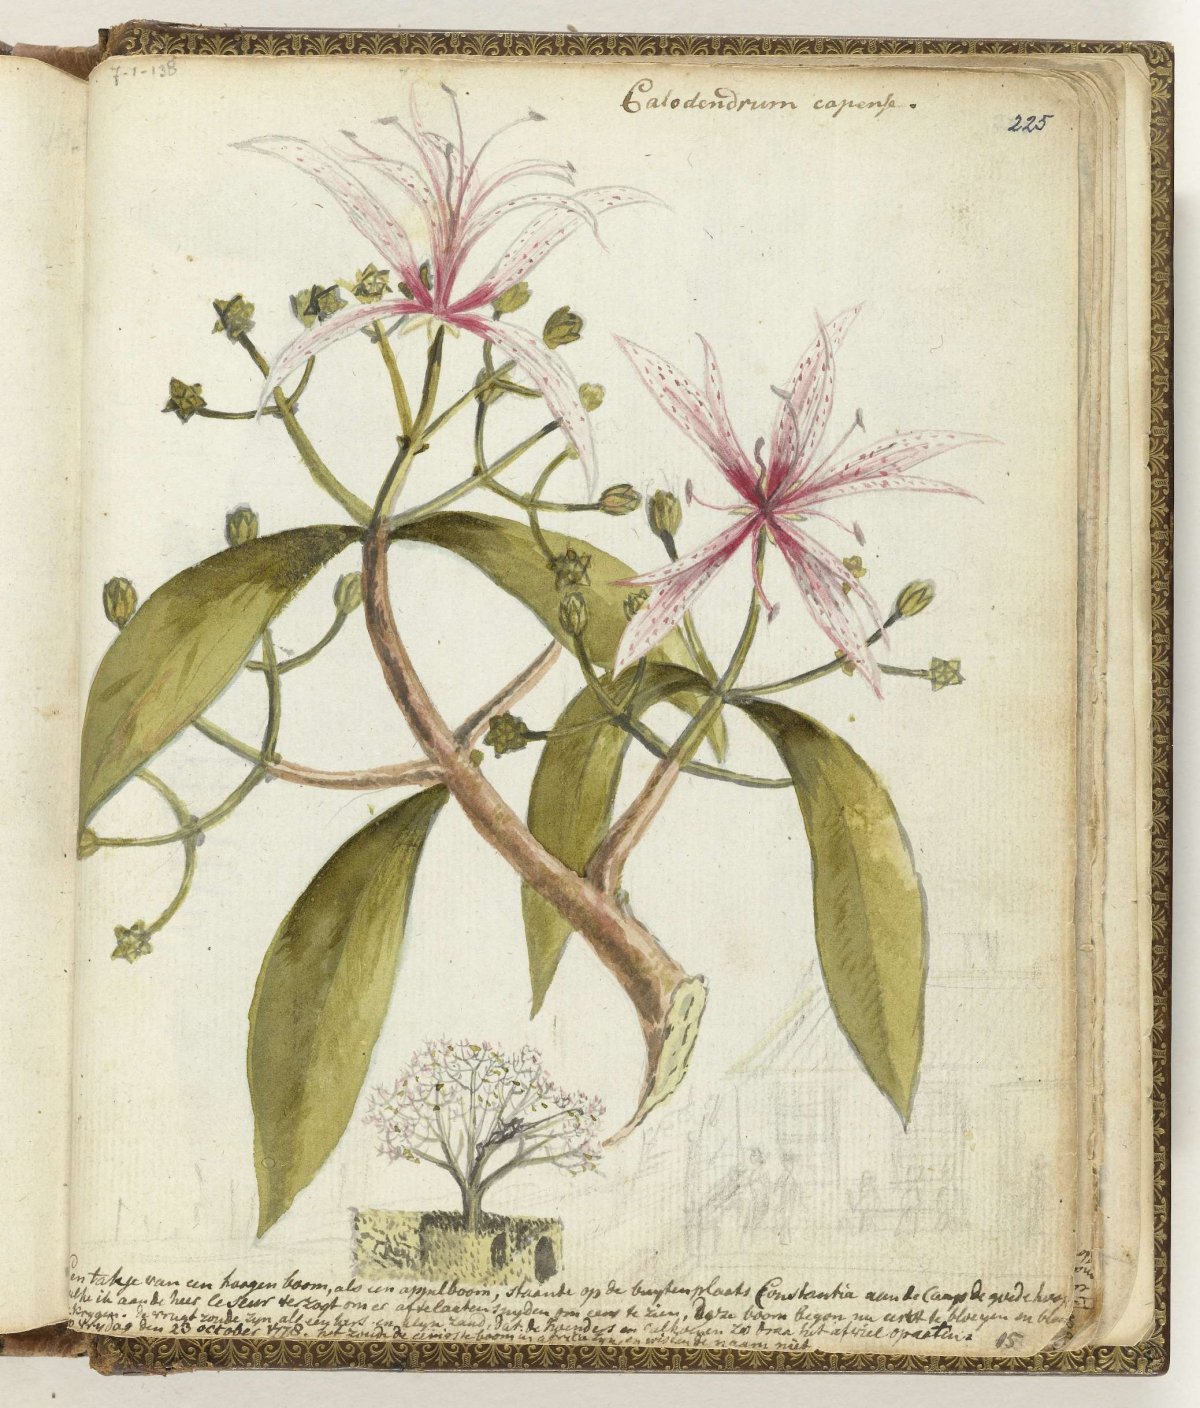 Kaapse hageboom, Jan Brandes, 1778